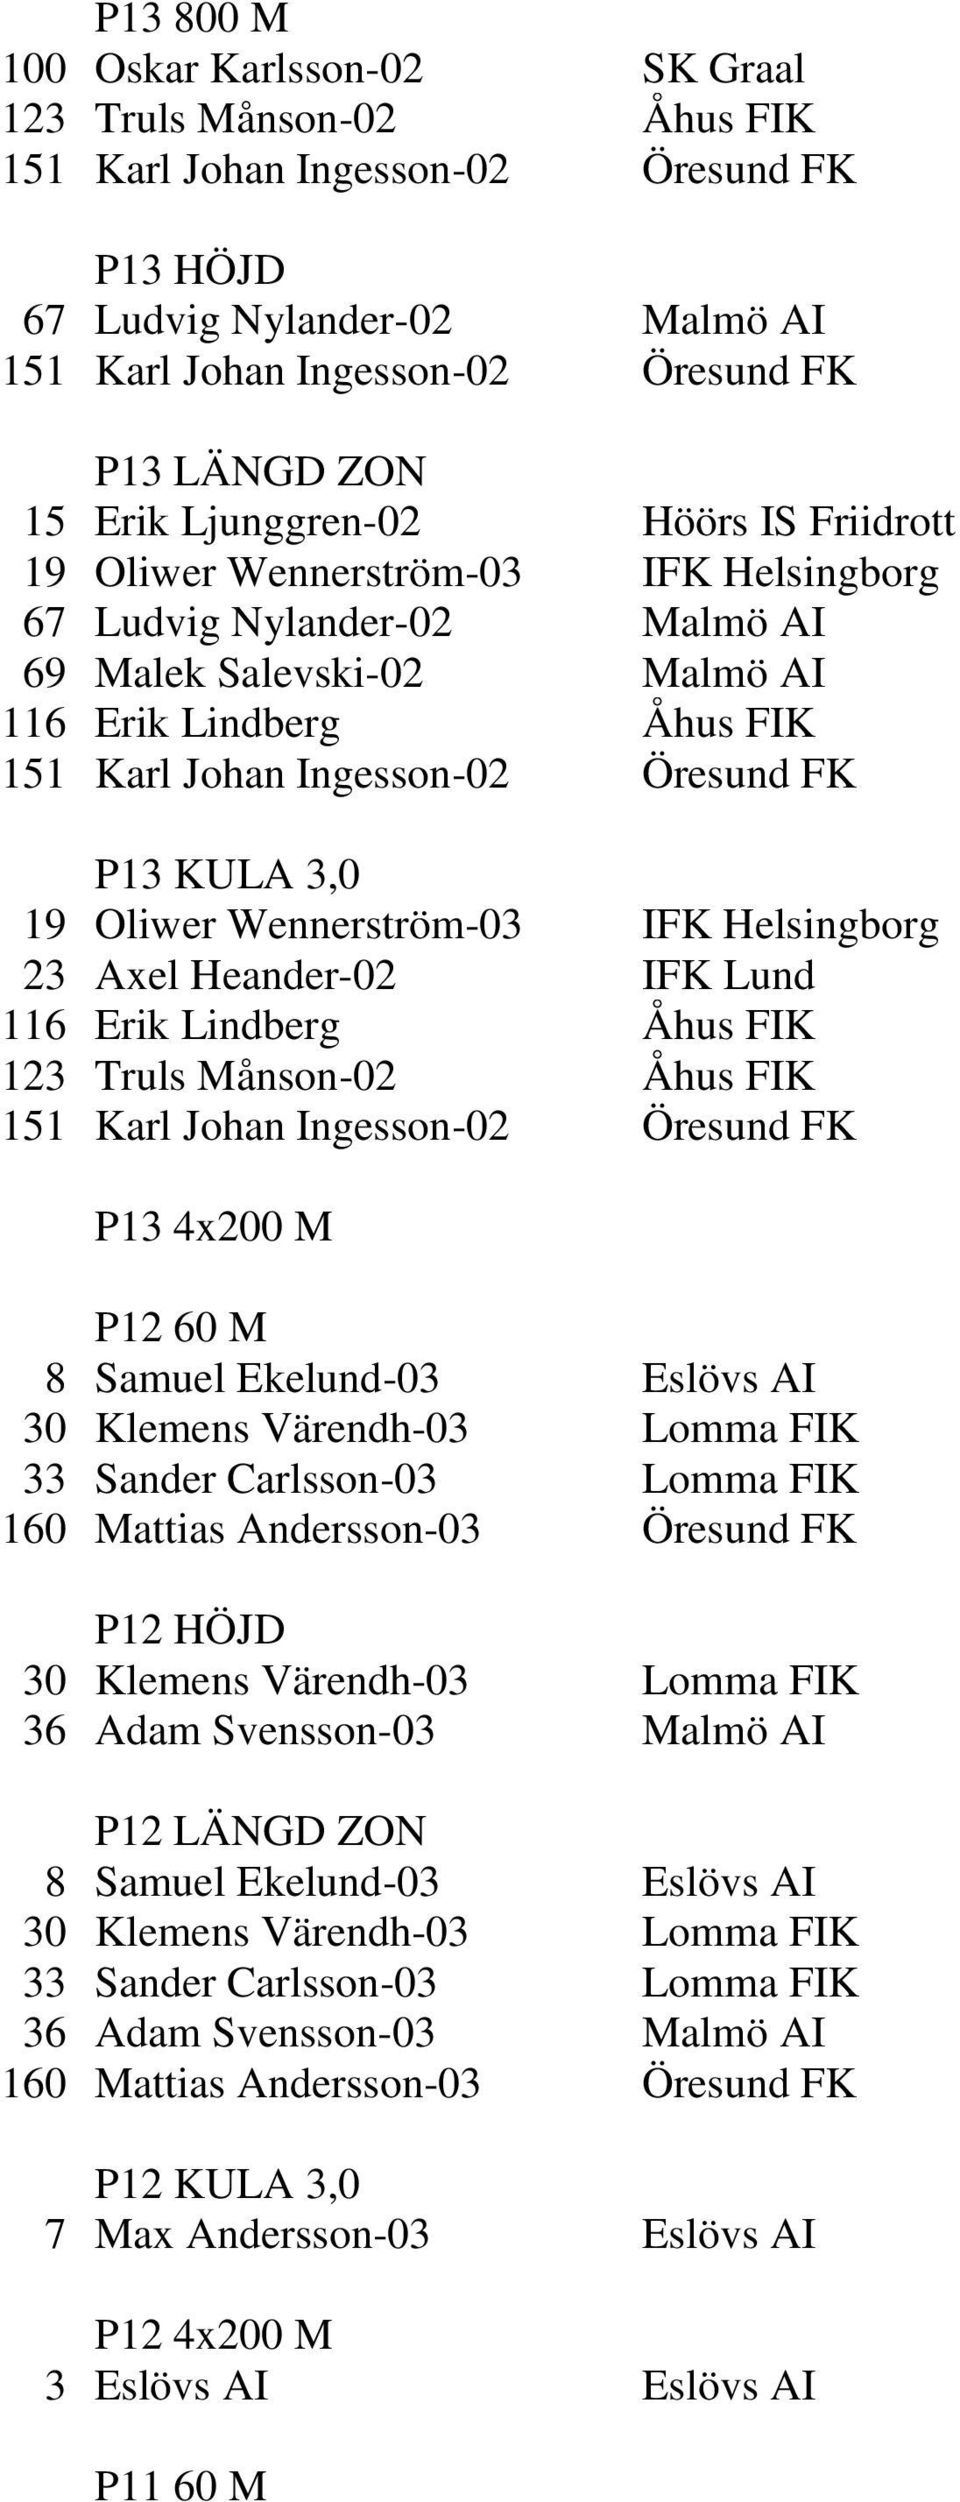 Öresund FK P13 KULA 3,0 19 Oliwer Wennerström-03 IFK Helsingborg 23 Axel Heander-02 IFK Lund 116 Erik Lindberg Åhus FIK 123 Truls Månson-02 Åhus FIK 151 Karl Johan Ingesson-02 Öresund FK P13 4x200 M